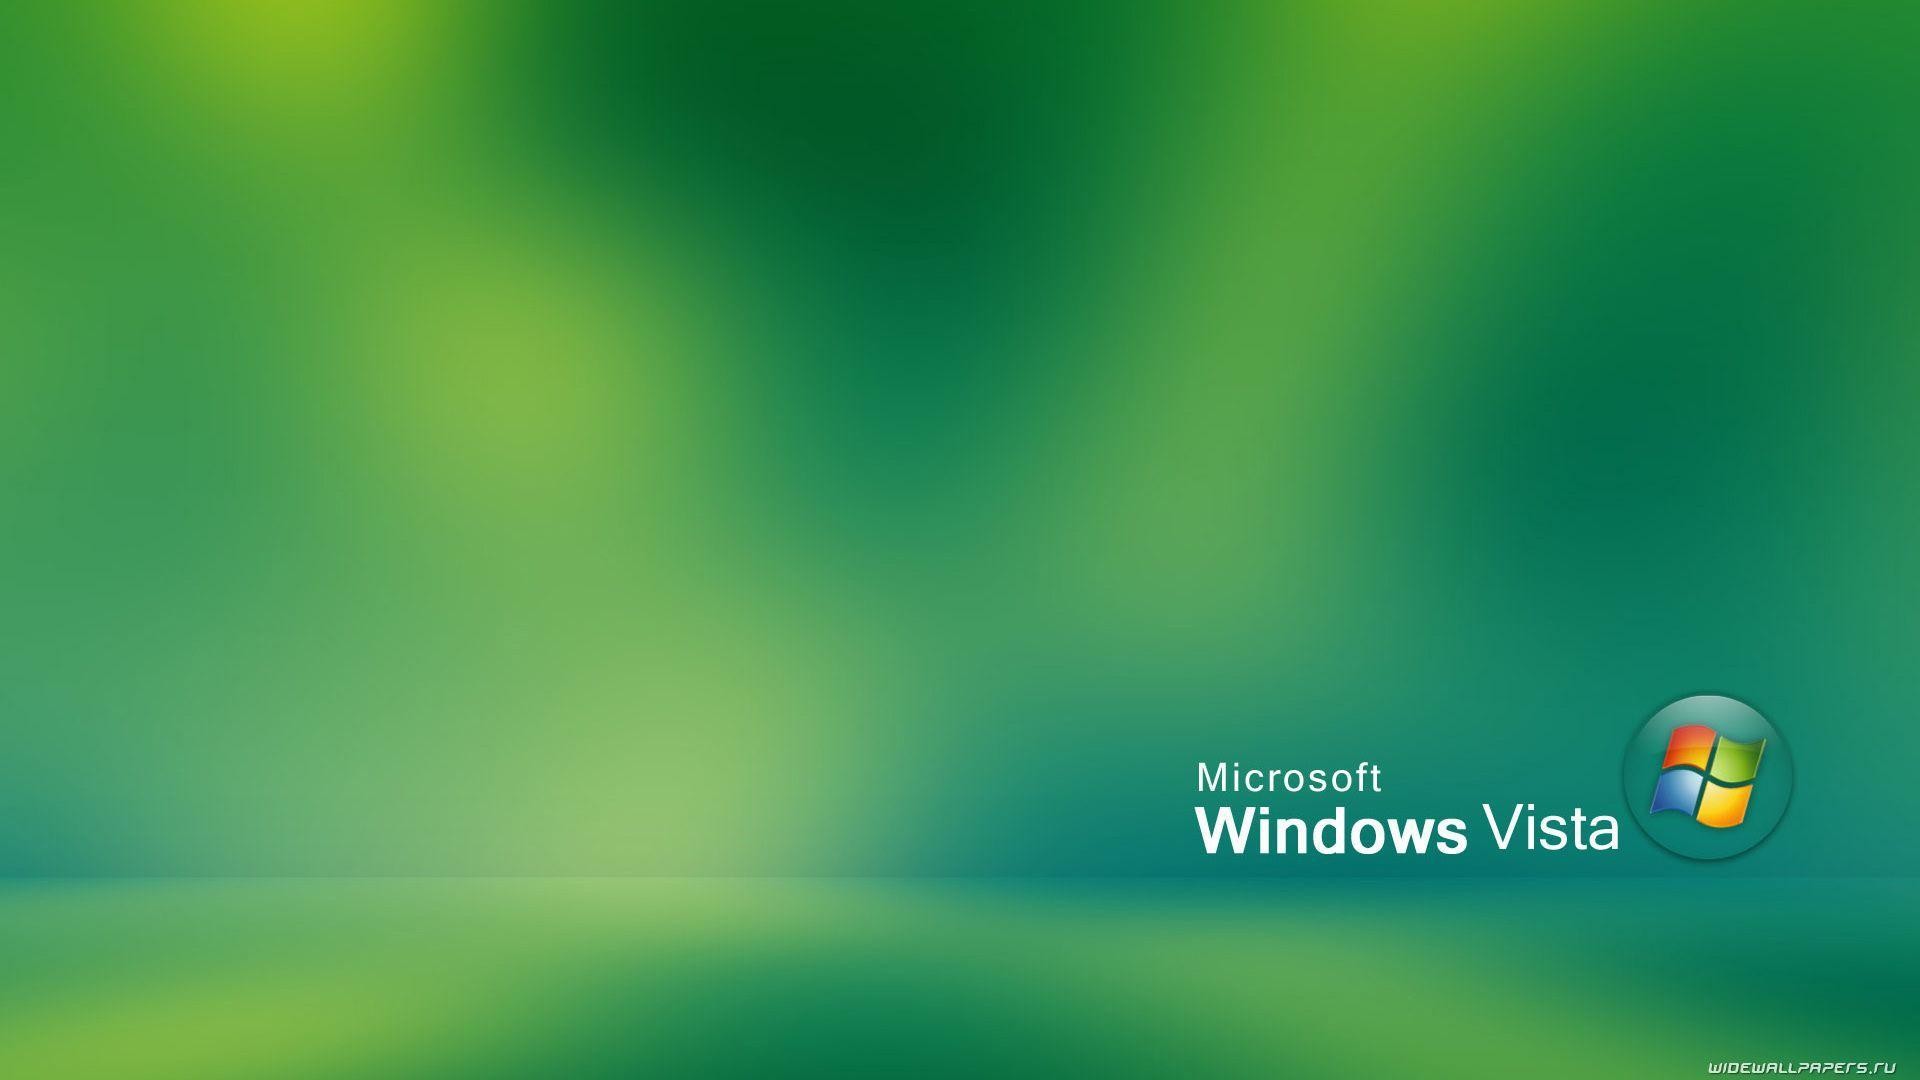 1920x1080 Wallpapers For > Windows Vista Wallpaper